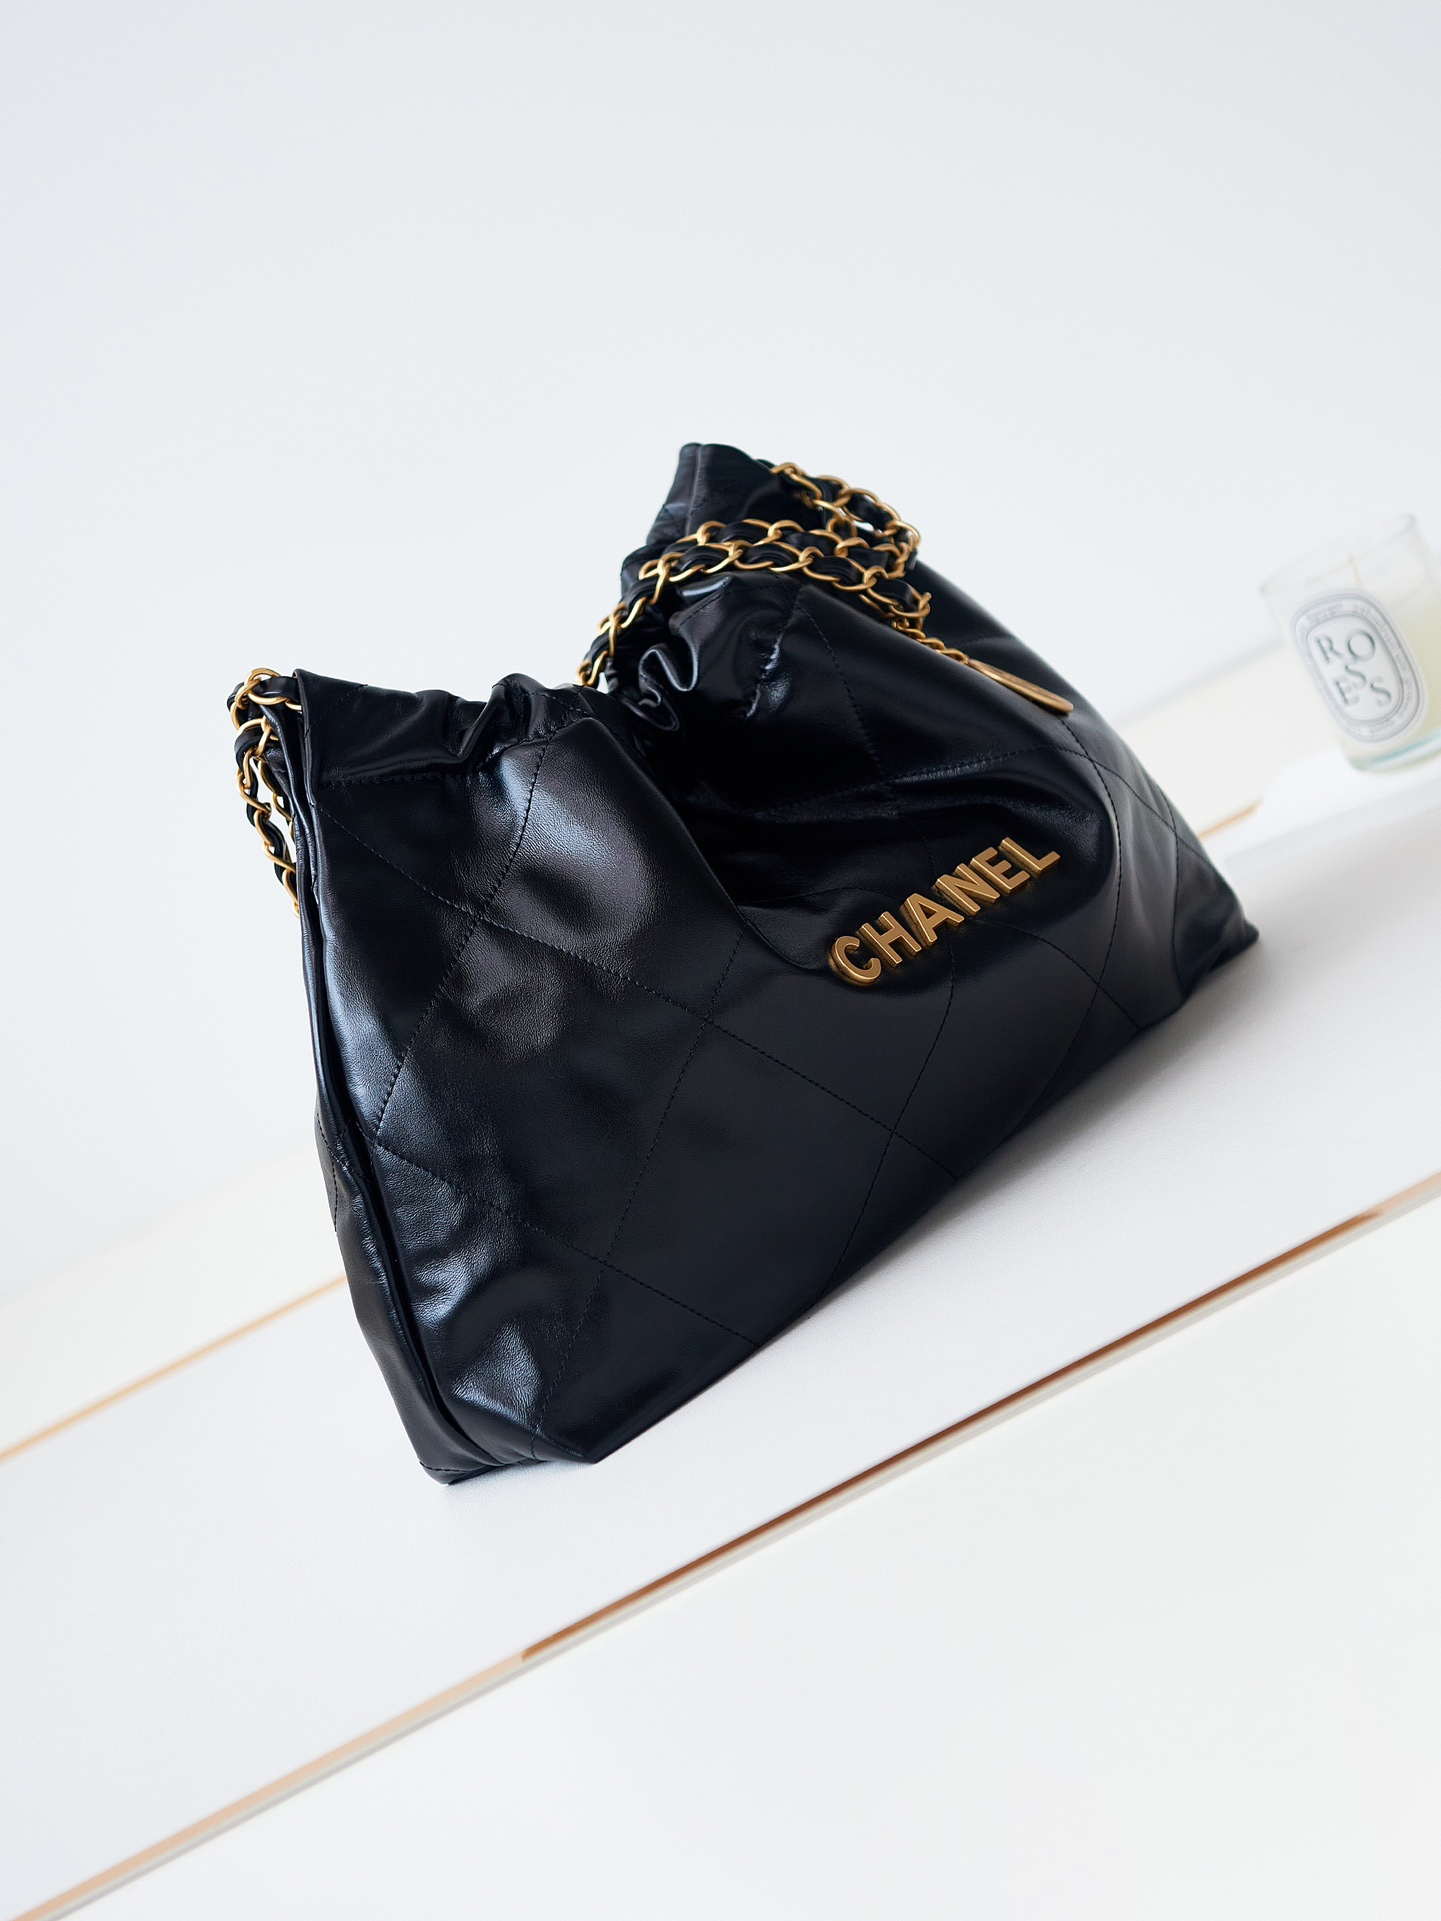 chanel-22-as4486-small-handbag-shiny-calfskin-black-with-gold-001-luxibags.ru